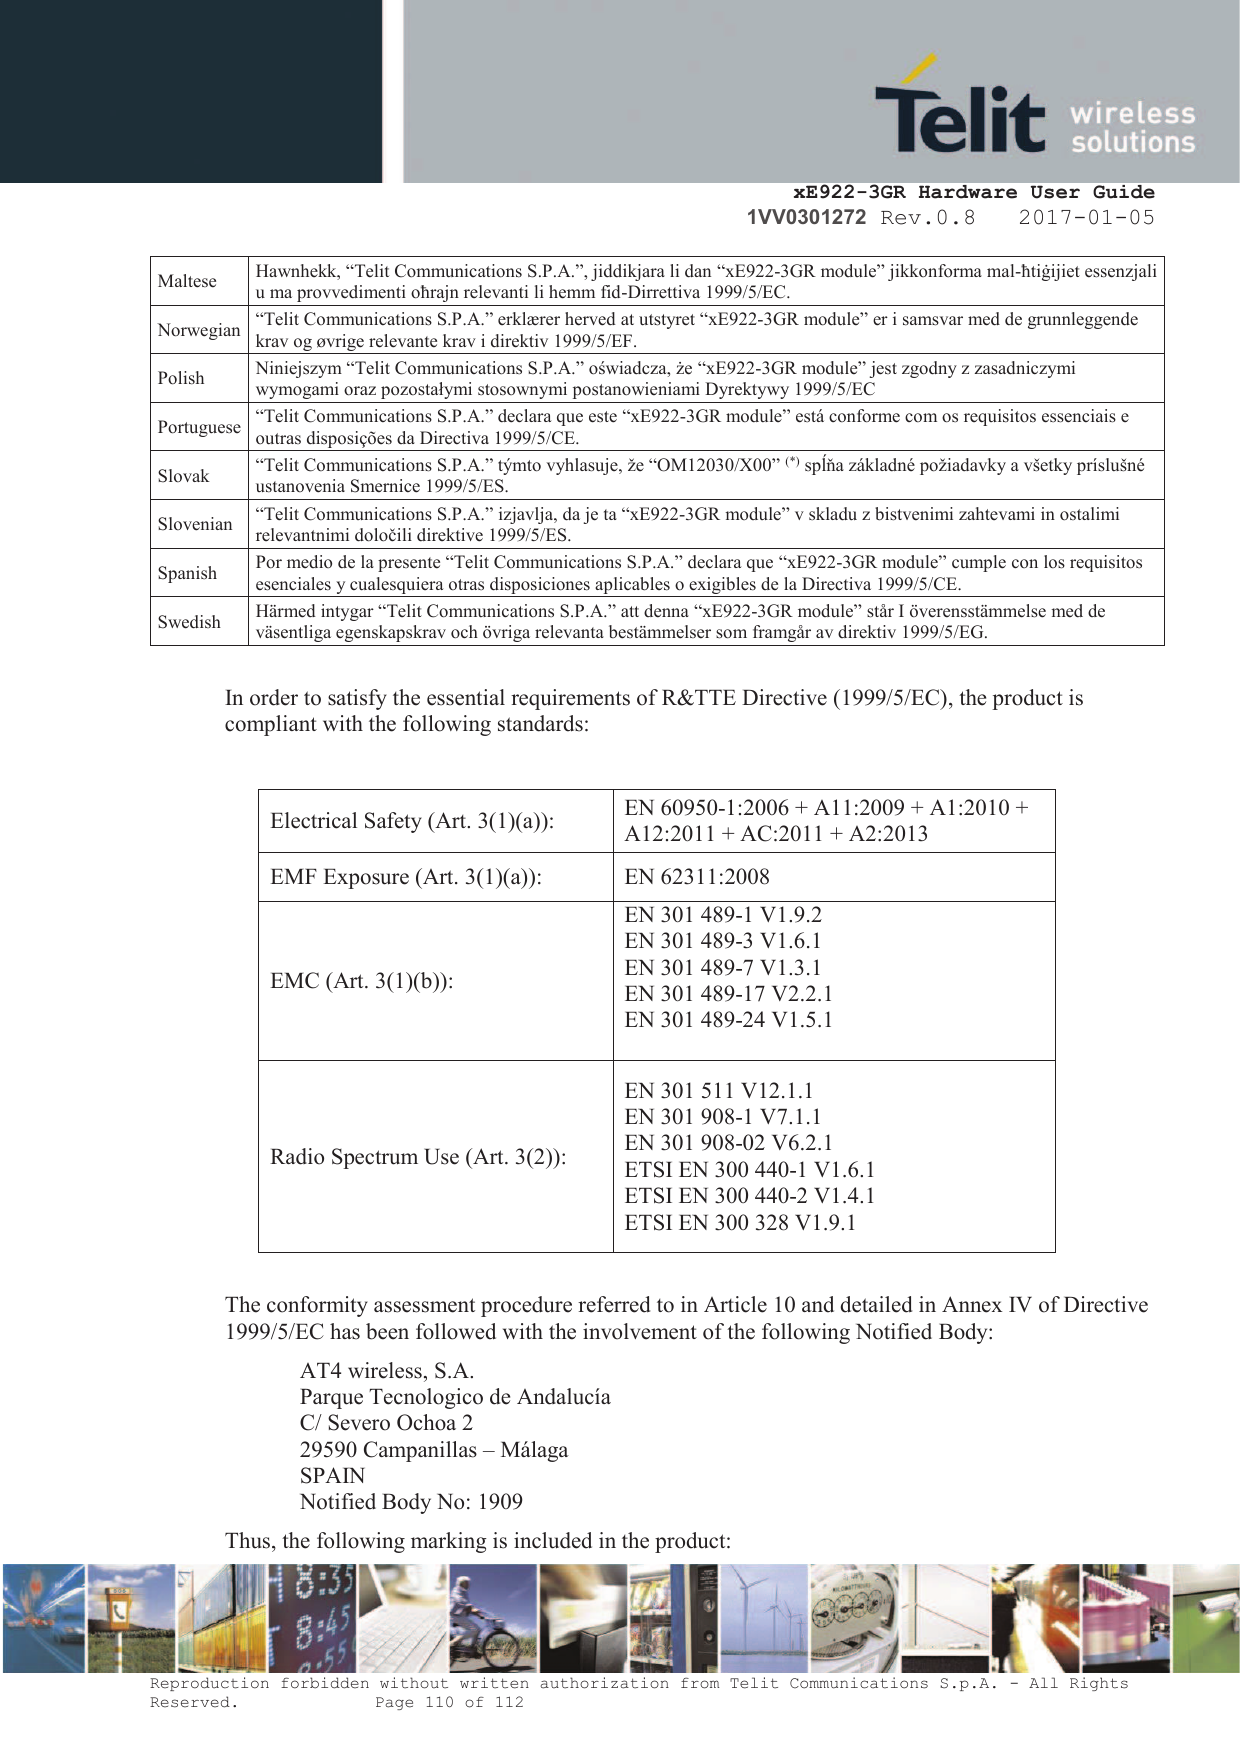     xE922-3GR Hardware User Guide 1VV0301272 Rev.0.8   2017-01-05 Reproduction forbidden without written authorization from Telit Communications S.p.A. - All Rights Reserved.    Page 110 of 112  Maltese Hawnhekk, “Telit Communications S.P.A.”, jiddikjara li dan “xE922-3GR module” jikkonforma mal-ħtiġijiet essenzjali u ma provvedimenti oħrajn relevanti li hemm fid-Dirrettiva 1999/5/EC. Norwegian “Telit Communications S.P.A.” erklærer herved at utstyret “xE922-3GR module” er i samsvar med de grunnleggende krav og øvrige relevante krav i direktiv 1999/5/EF. Polish Niniejszym “Telit Communications S.P.A.” oświadcza, że “xE922-3GR module” jest zgodny z zasadniczymi wymogami oraz pozostałymi stosownymi postanowieniami Dyrektywy 1999/5/EC Portuguese “Telit Communications S.P.A.” declara que este “xE922-3GR module” está conforme com os requisitos essenciais e outras disposições da Directiva 1999/5/CE. Slovak “Telit Communications S.P.A.” týmto vyhlasuje, že “OM12030/X00” (*) spĺňa základné požiadavky a všetky príslušné ustanovenia Smernice 1999/5/ES. Slovenian “Telit Communications S.P.A.” izjavlja, da je ta “xE922-3GR module” v skladu z bistvenimi zahtevami in ostalimi relevantnimi določili direktive 1999/5/ES. Spanish Por medio de la presente “Telit Communications S.P.A.” declara que “xE922-3GR module” cumple con los requisitos esenciales y cualesquiera otras disposiciones aplicables o exigibles de la Directiva 1999/5/CE. Swedish Härmed intygar “Telit Communications S.P.A.” att denna “xE922-3GR module” står I överensstämmelse med de väsentliga egenskapskrav och övriga relevanta bestämmelser som framgår av direktiv 1999/5/EG.  In order to satisfy the essential requirements of R&amp;TTE Directive (1999/5/EC), the product is compliant with the following standards:  Electrical Safety (Art. 3(1)(a)):  EN 60950-1:2006 + A11:2009 + A1:2010 + A12:2011 + AC:2011 + A2:2013 EMF Exposure (Art. 3(1)(a)):  EN 62311:2008 EMC (Art. 3(1)(b)):  EN 301 489-1 V1.9.2 EN 301 489-3 V1.6.1 EN 301 489-7 V1.3.1 EN 301 489-17 V2.2.1 EN 301 489-24 V1.5.1  Radio Spectrum Use (Art. 3(2)):  EN 301 511 V12.1.1 EN 301 908-1 V7.1.1 EN 301 908-02 V6.2.1 ETSI EN 300 440-1 V1.6.1 ETSI EN 300 440-2 V1.4.1 ETSI EN 300 328 V1.9.1  The conformity assessment procedure referred to in Article 10 and detailed in Annex IV of Directive 1999/5/EC has been followed with the involvement of the following Notified Body: AT4 wireless, S.A. Parque Tecnologico de Andalucía C/ Severo Ochoa 2 29590 Campanillas – Málaga SPAIN Notified Body No: 1909 Thus, the following marking is included in the product: 